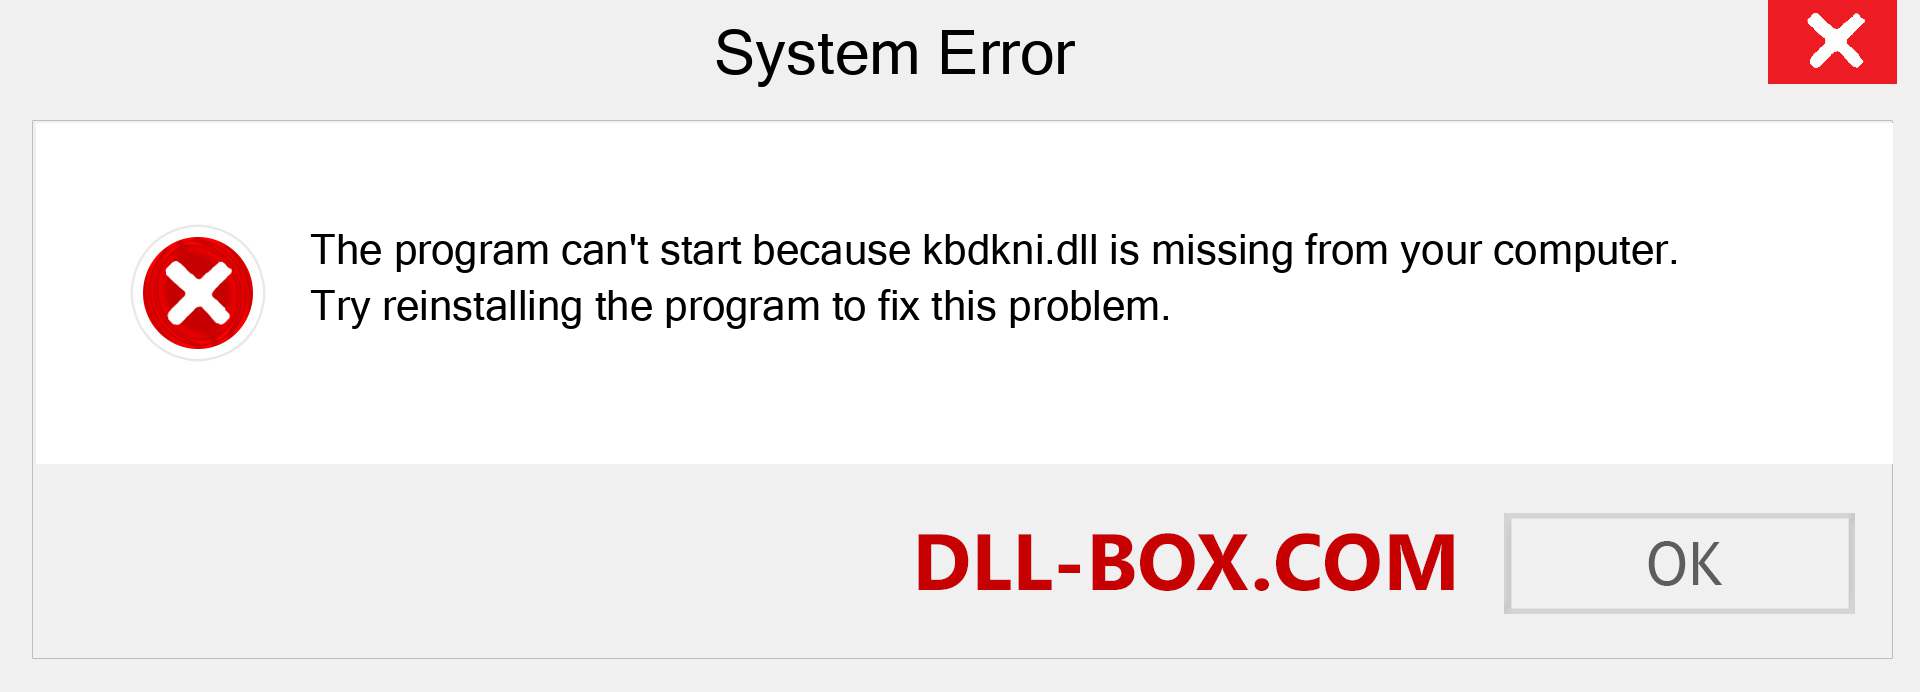  kbdkni.dll file is missing?. Download for Windows 7, 8, 10 - Fix  kbdkni dll Missing Error on Windows, photos, images